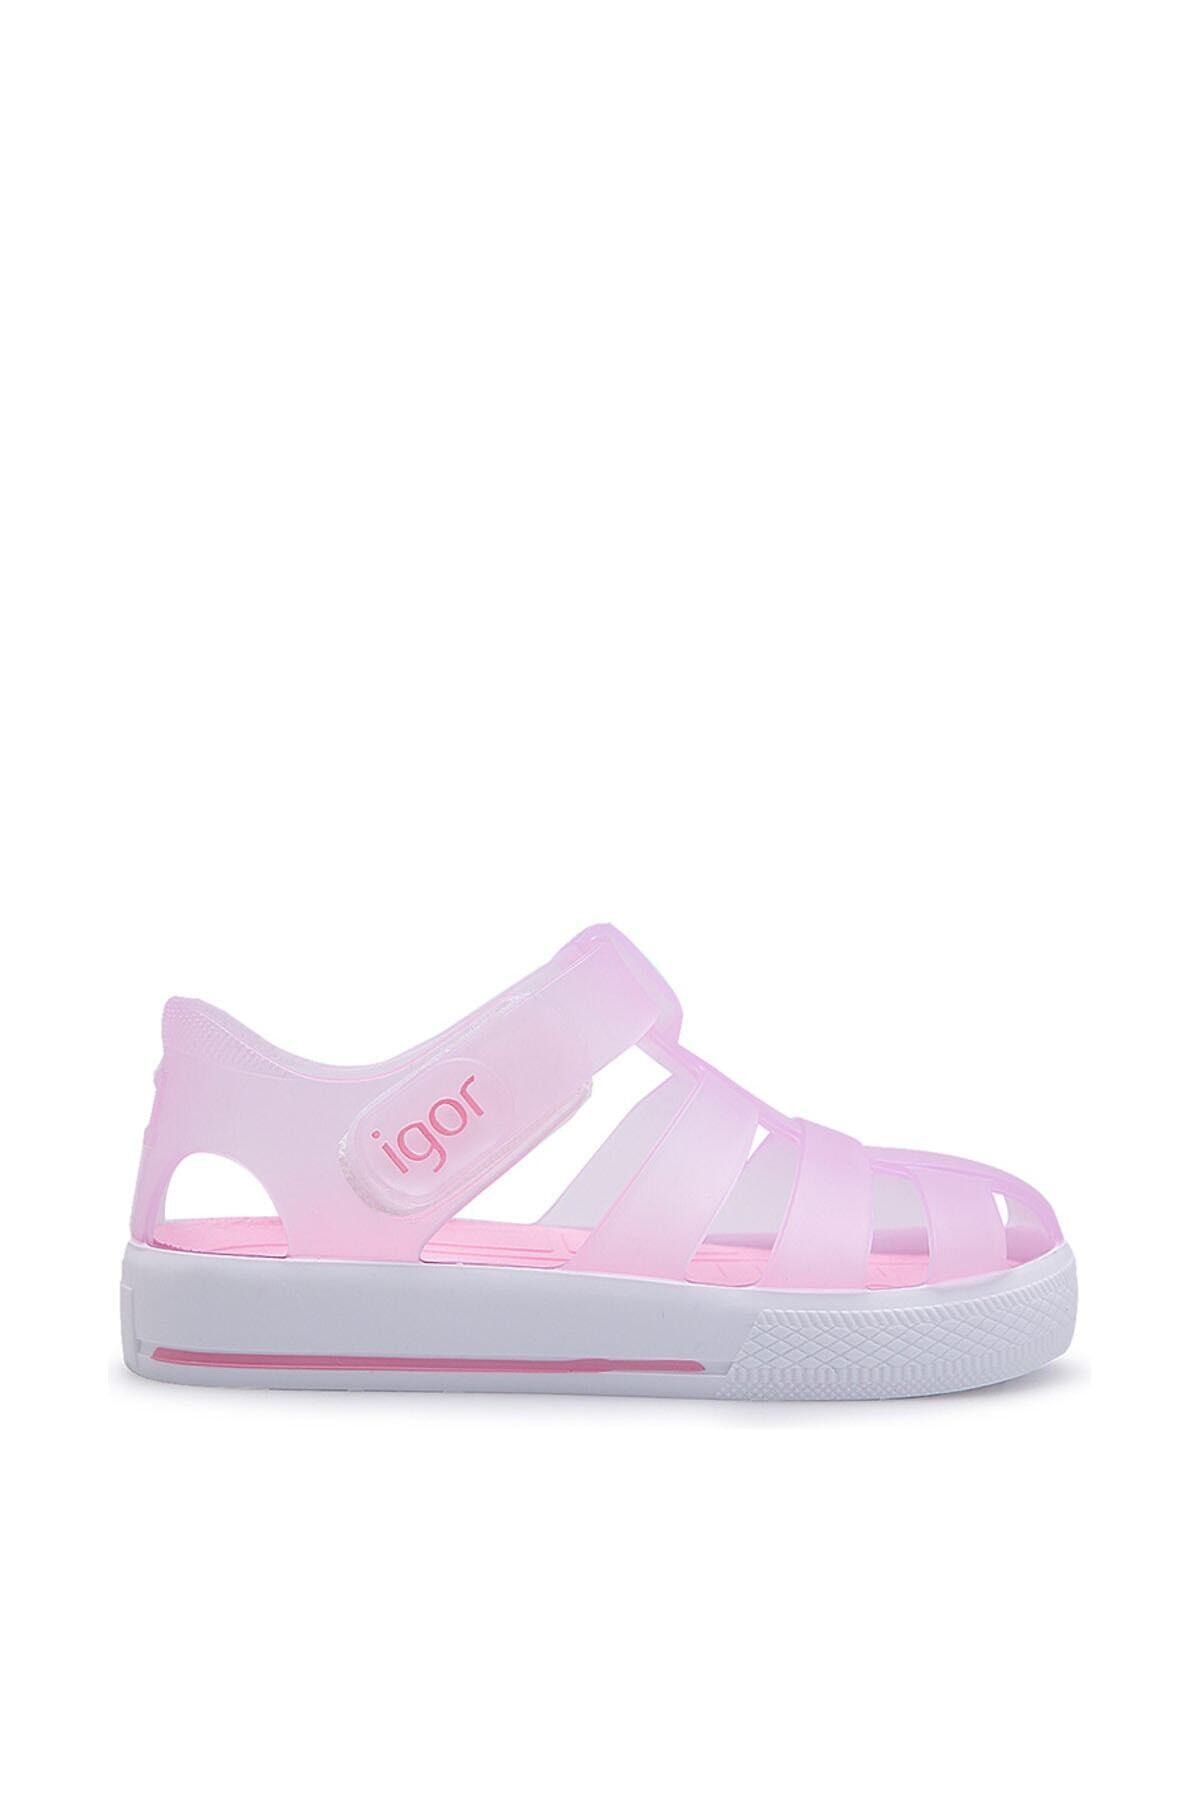 IGOR Kız Çocuk Pembe  Spor Sandalet S10171-022 (2020) 19-29